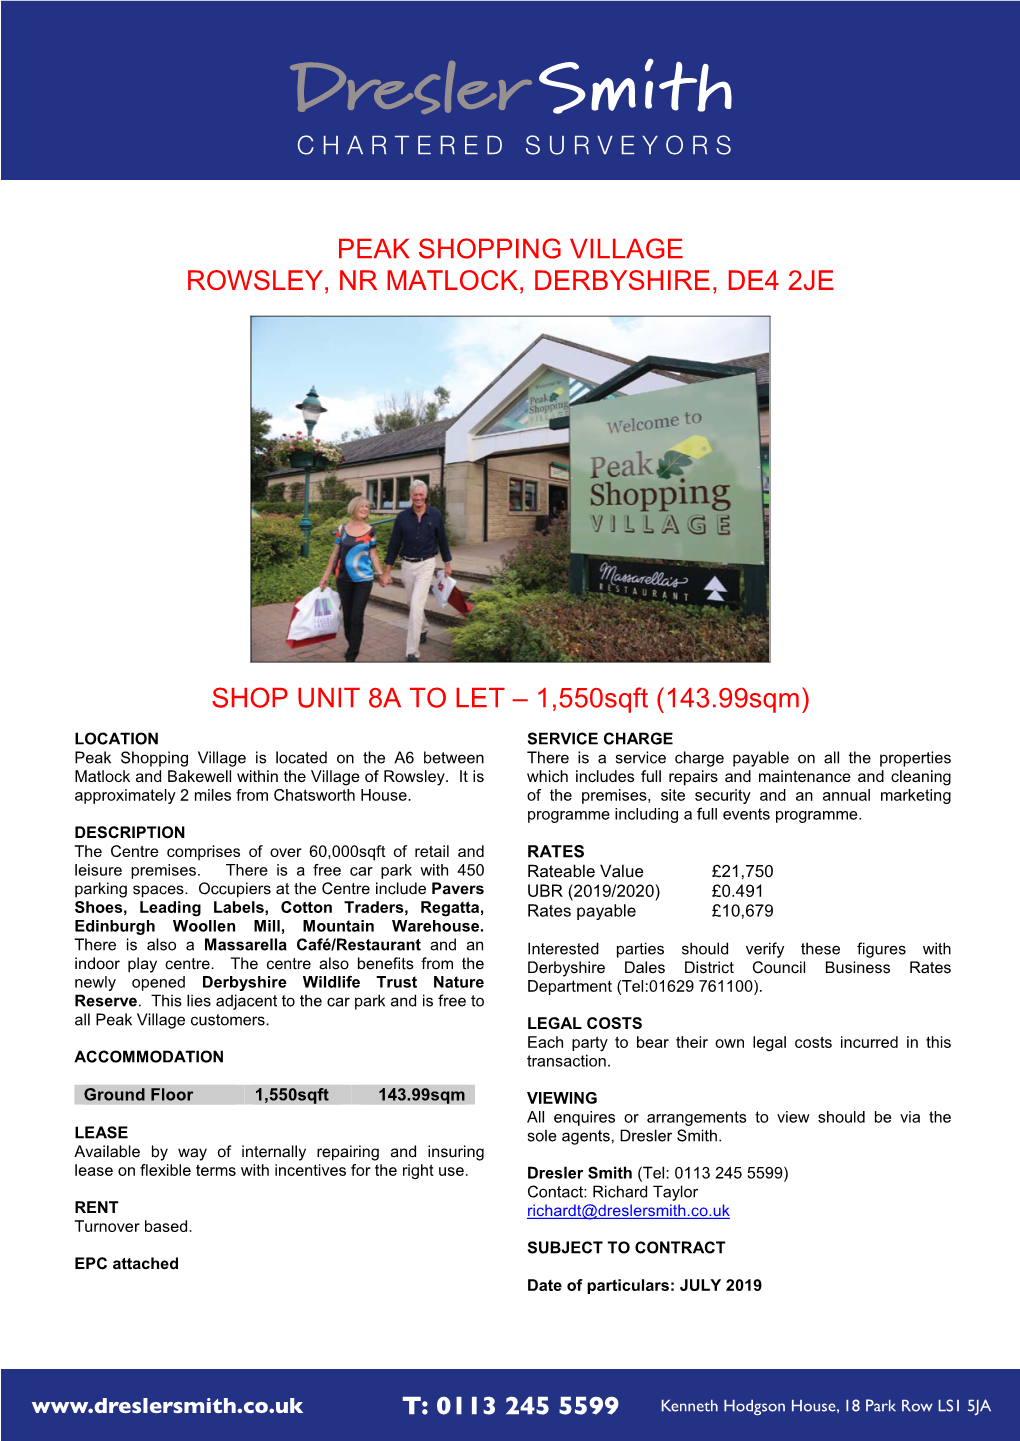 Peak Shopping Village Rowsley, Nr Matlock, Derbyshire, De4 2Je